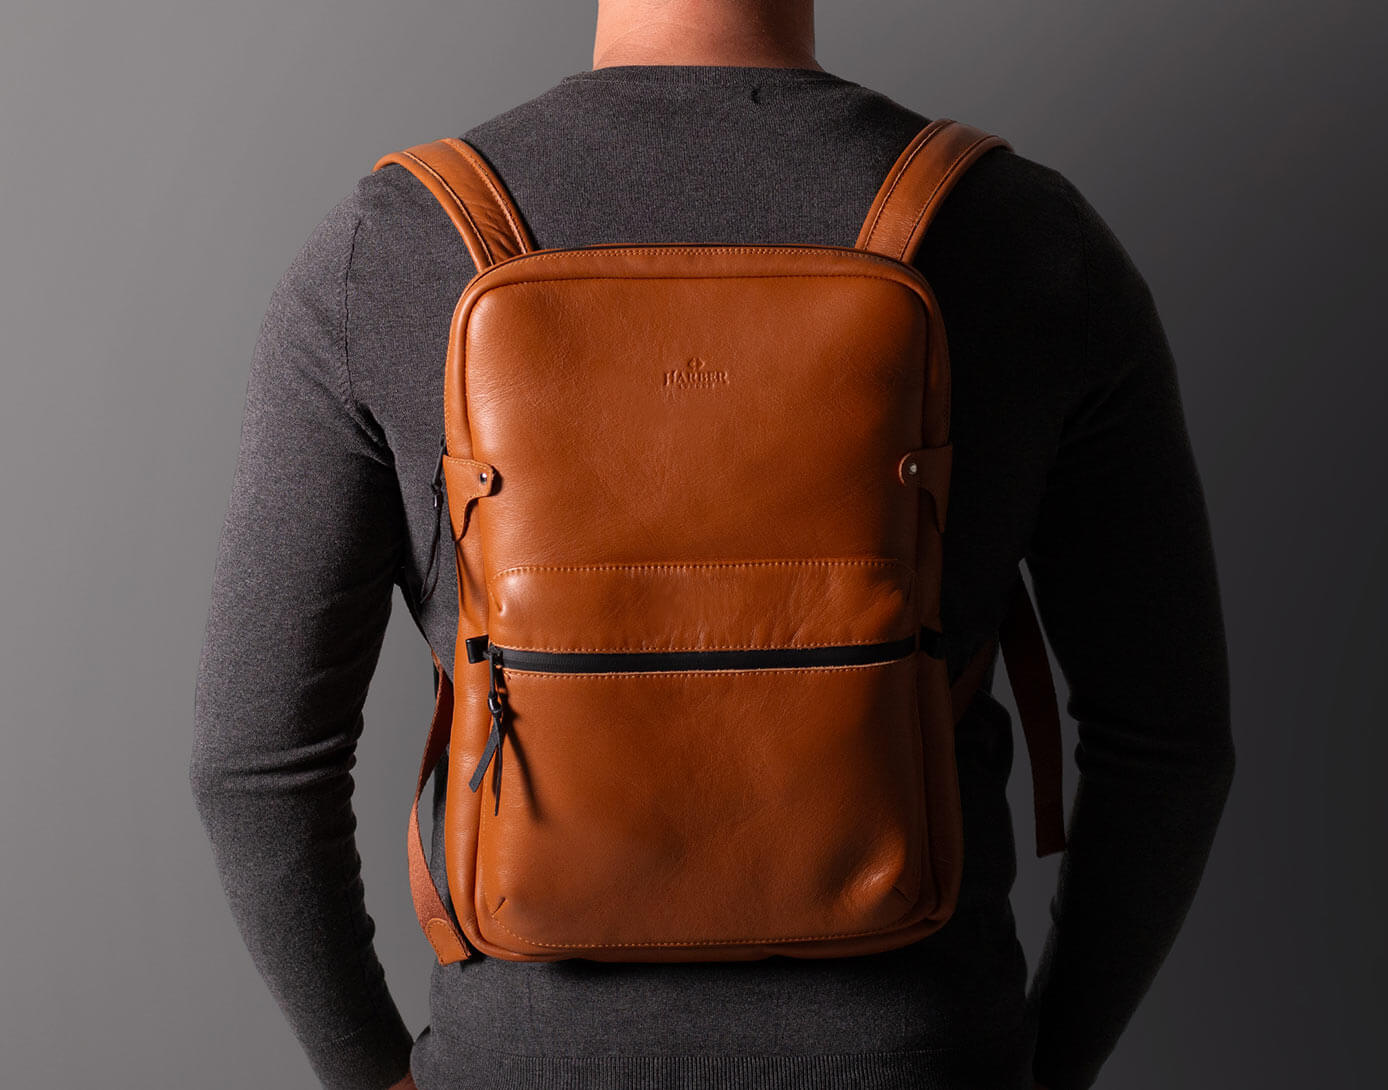 Slim leather laptop backpack